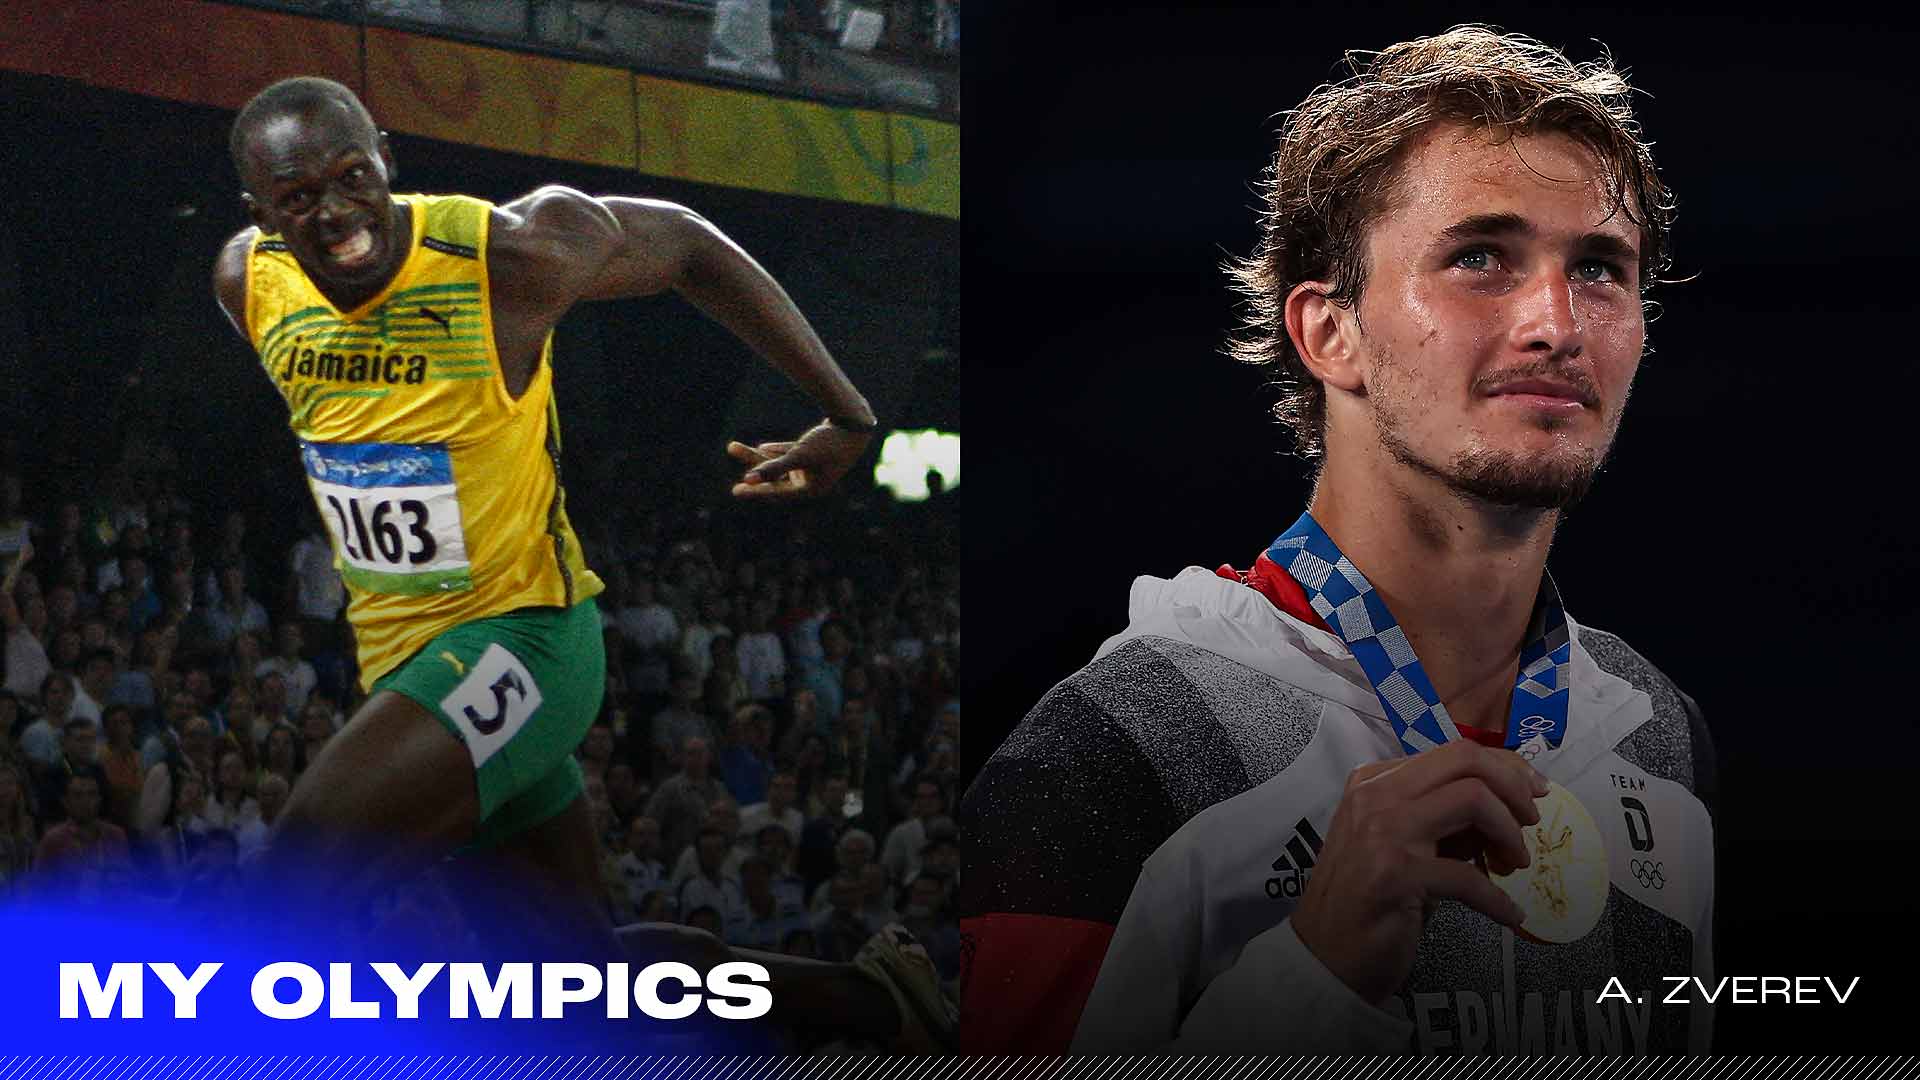 Alexander Zverev recalls Usain Bolt's 100m heroics in Beijing as one of his earliest Olympic memories.